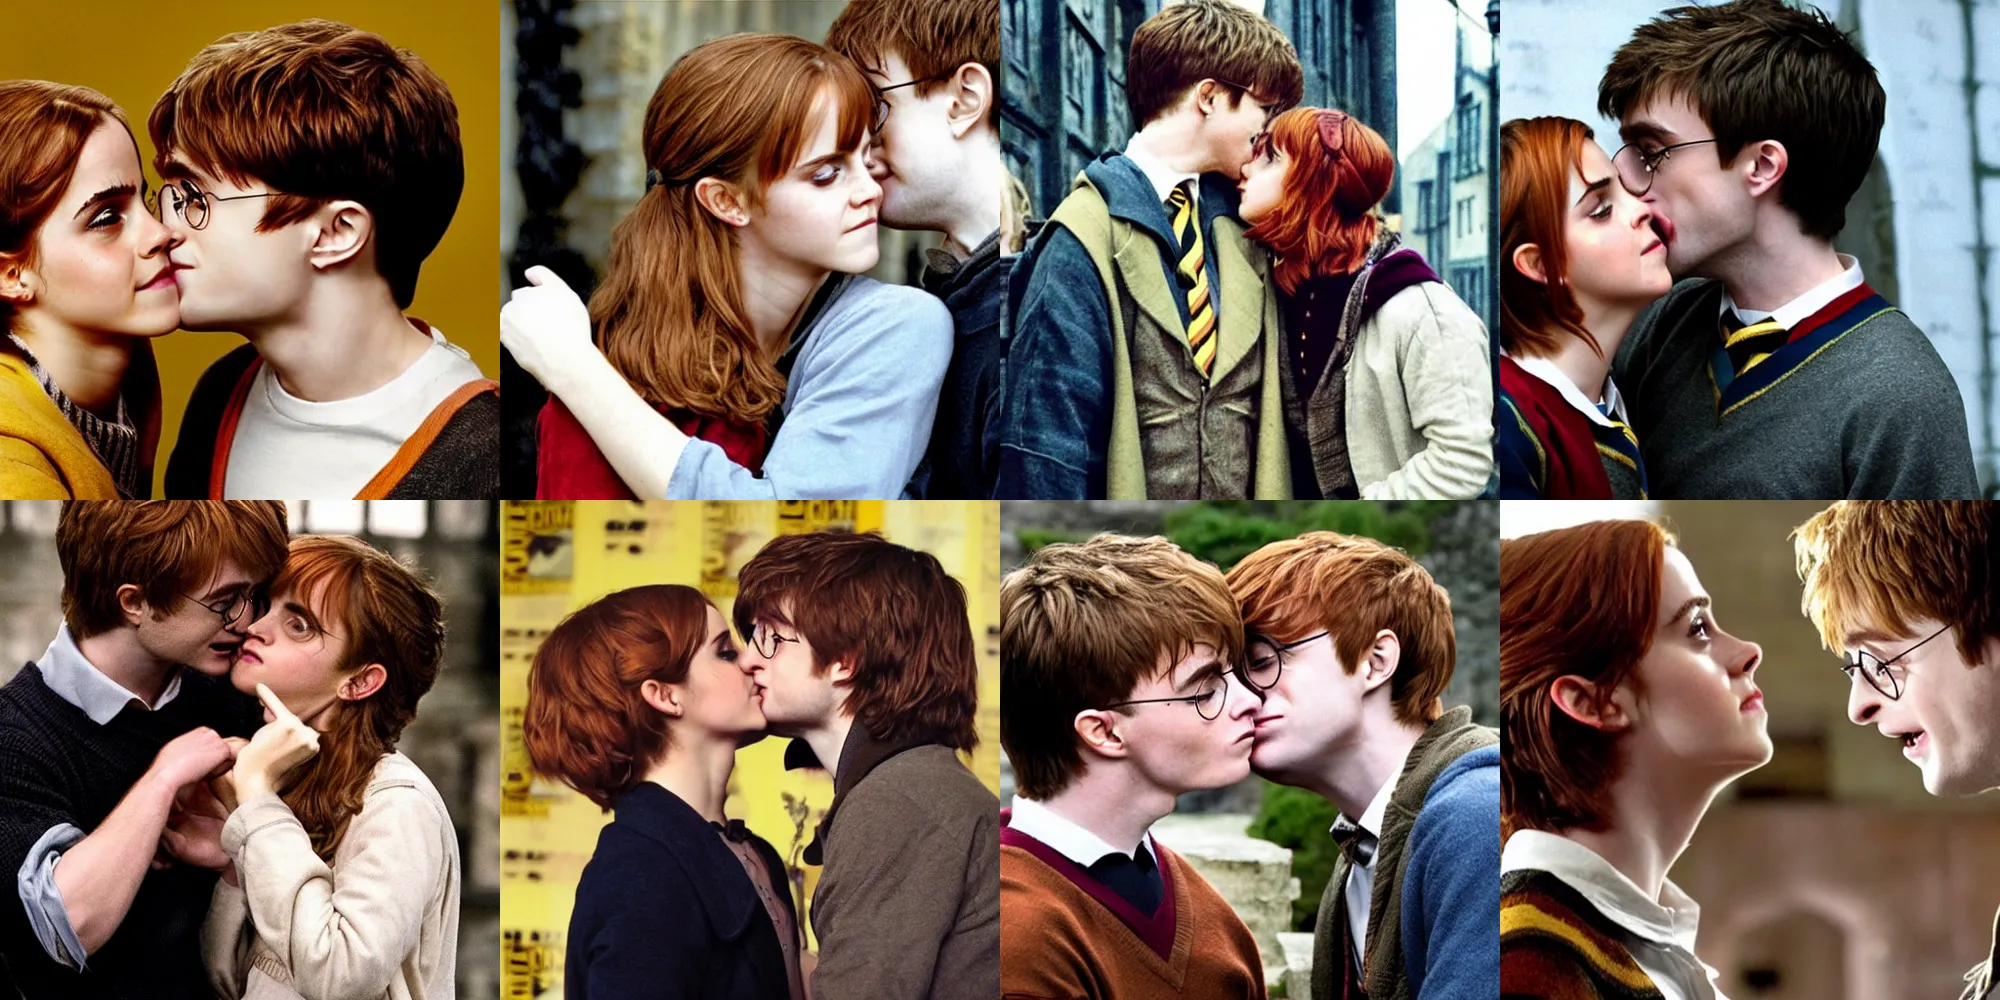 Prompt: Emma Watson as Harry Potter, kissing Daniel Radcliffe as Ron Weasley.